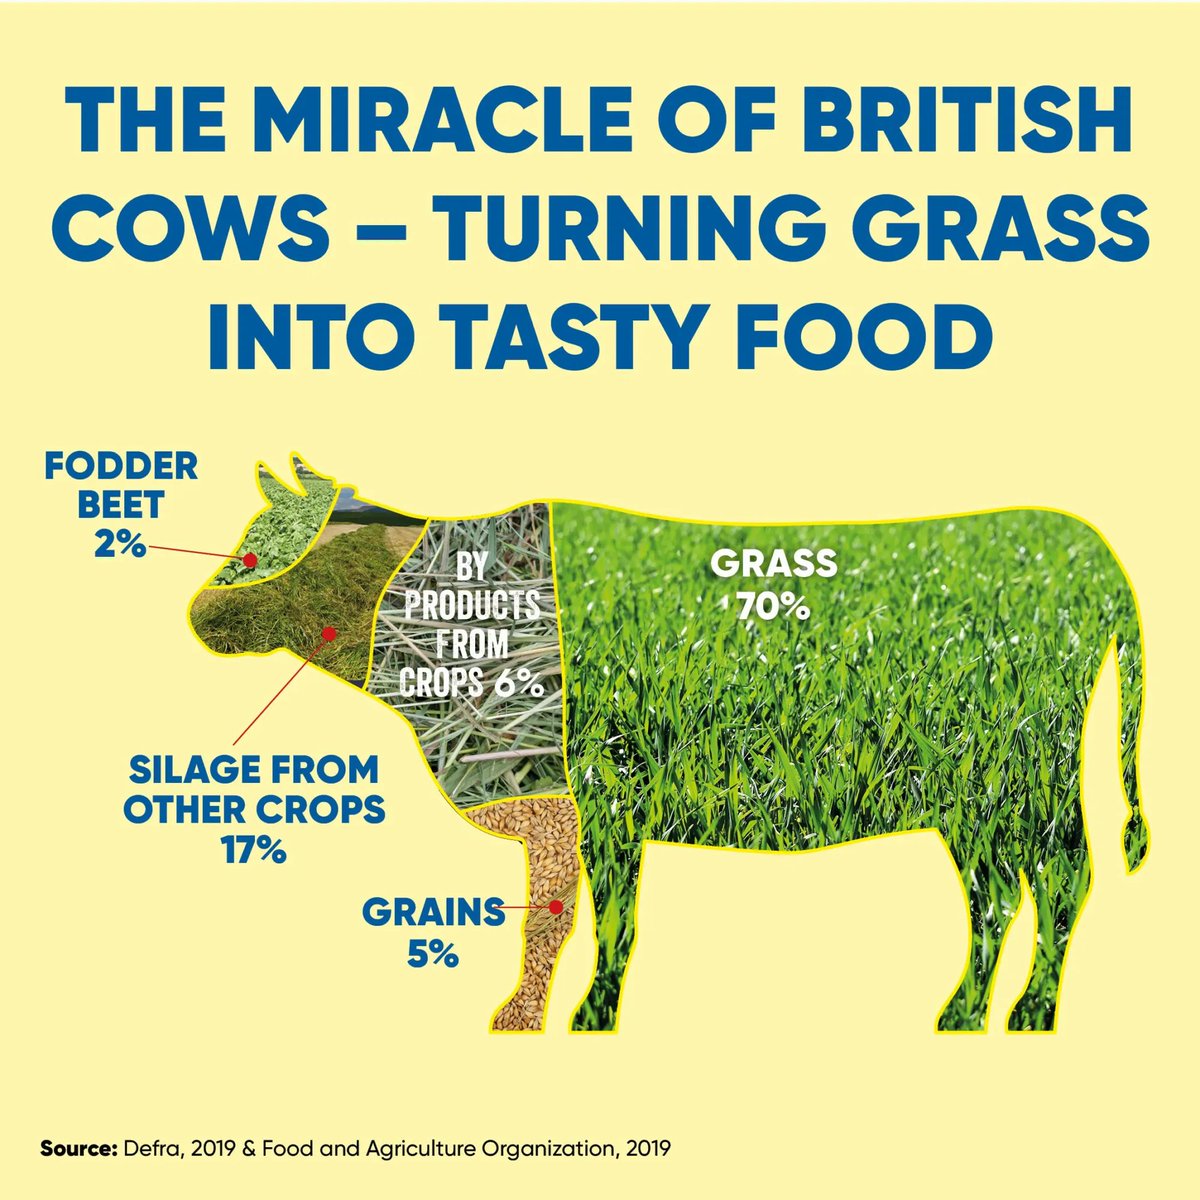 Back British cattle farming! 🐄 🇬🇧